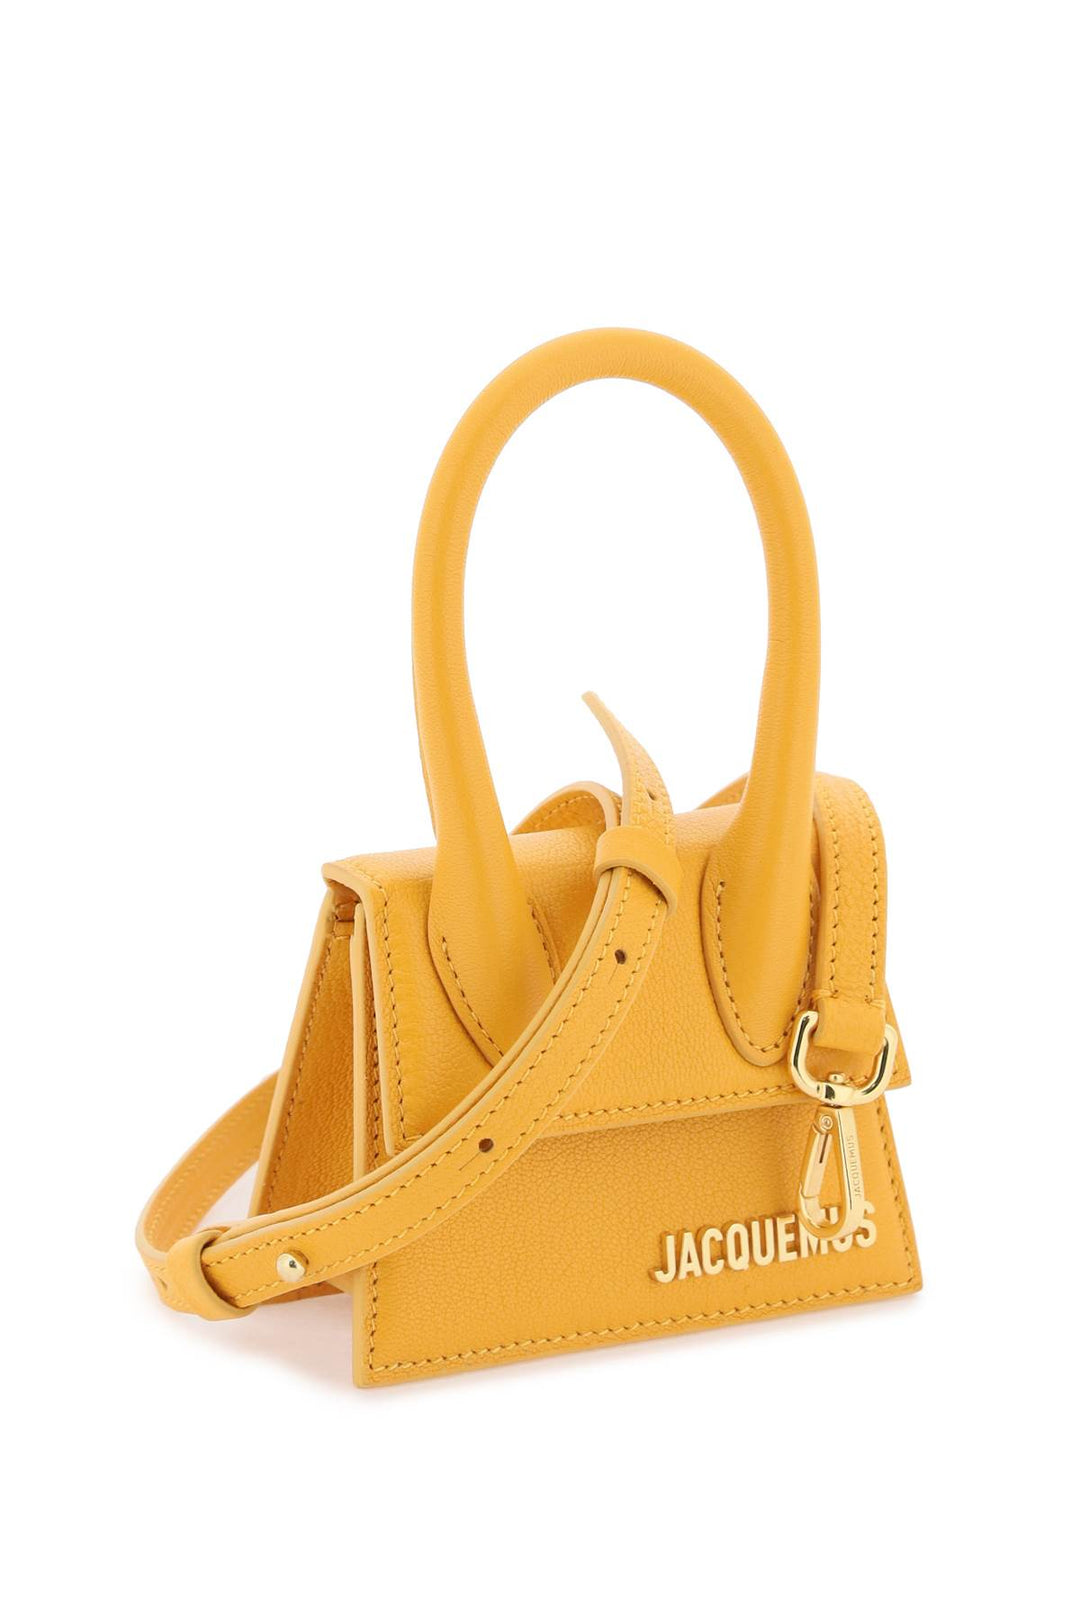 Jacquemus Le Chiquito Micro Bag   Arancio